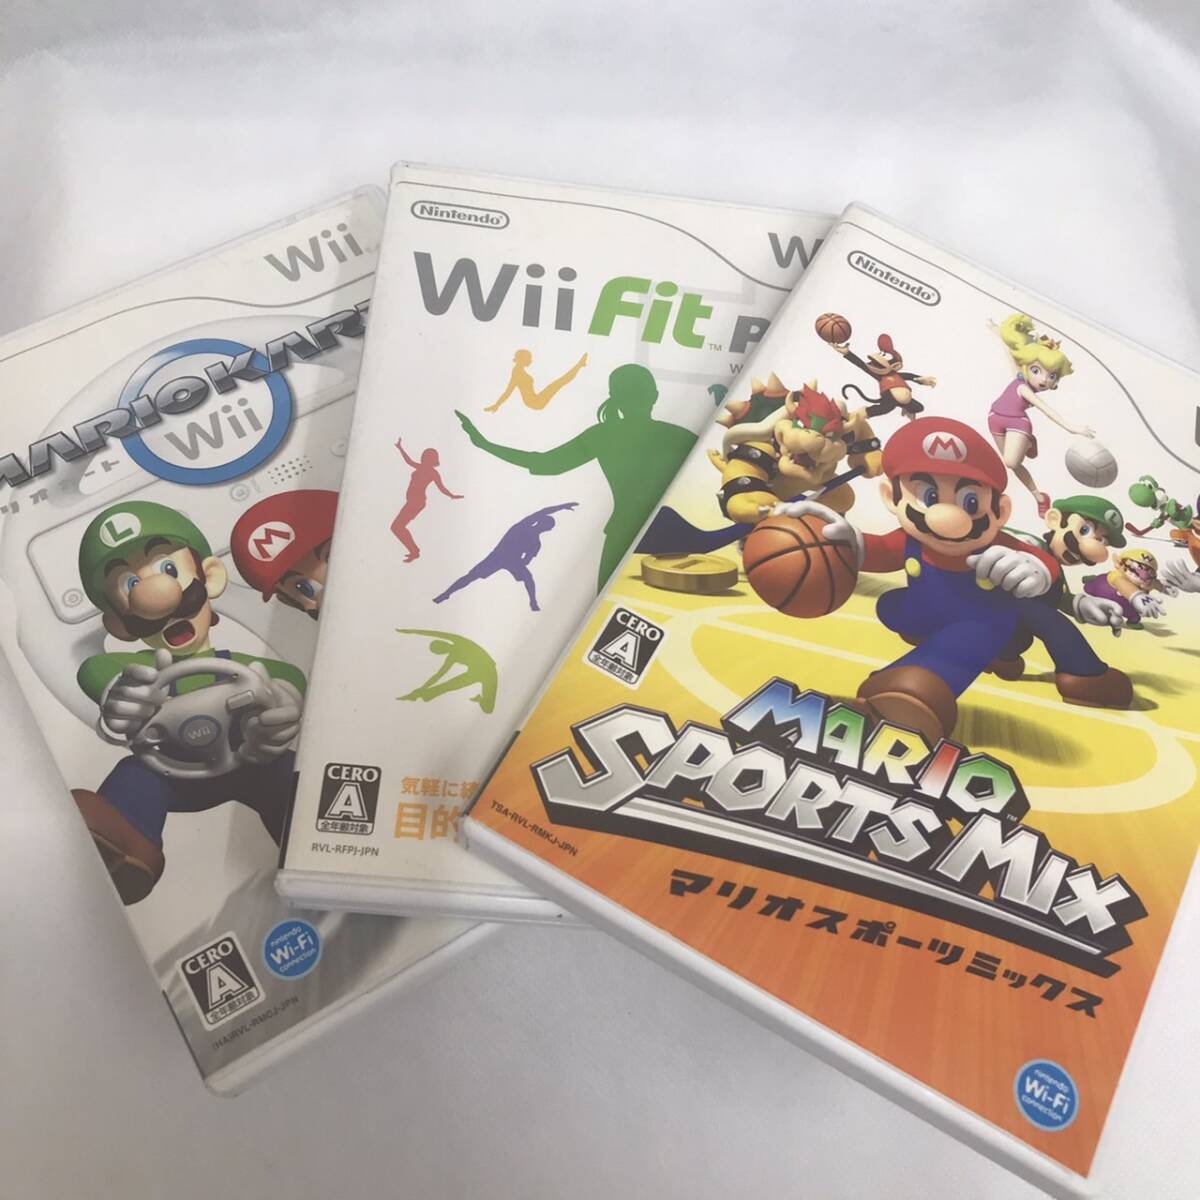 Wii U & game cassette set |wi- You | Mario Cart | Mario sport Mix |Wii Fit| nintendo | Nintendo | home use game machine 